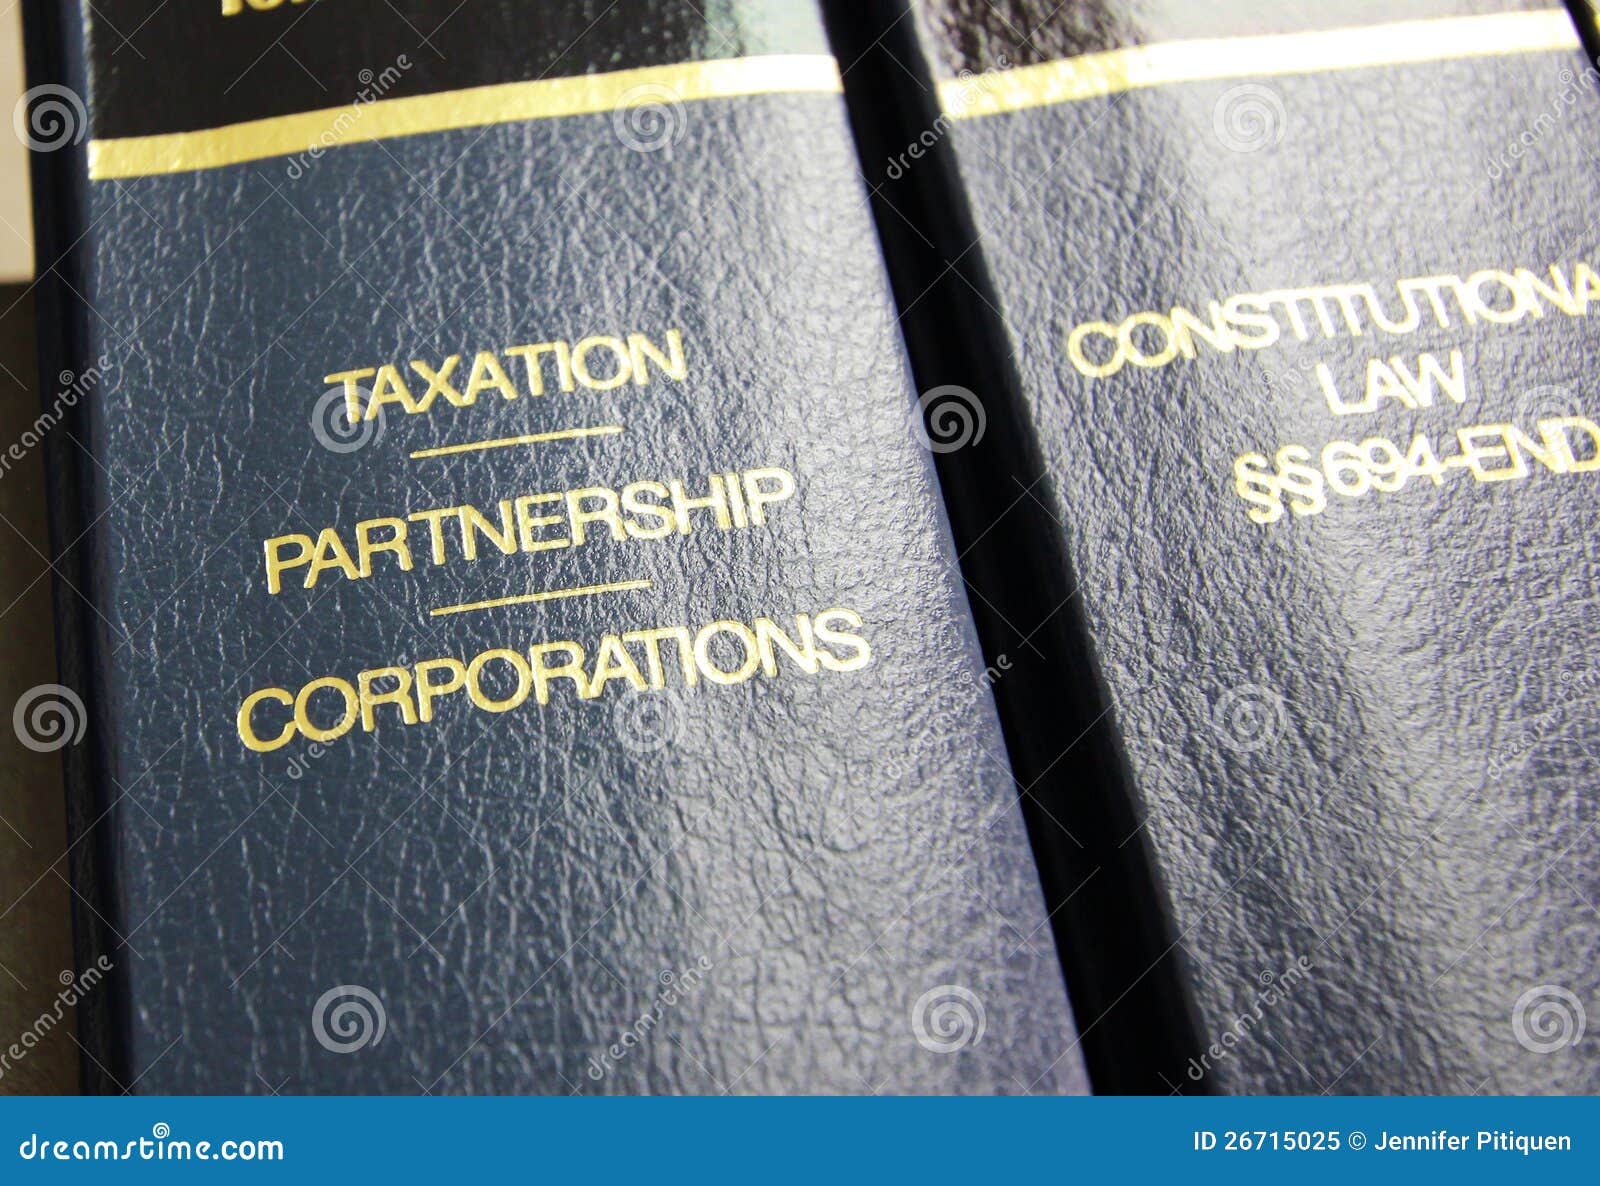 taxation law books